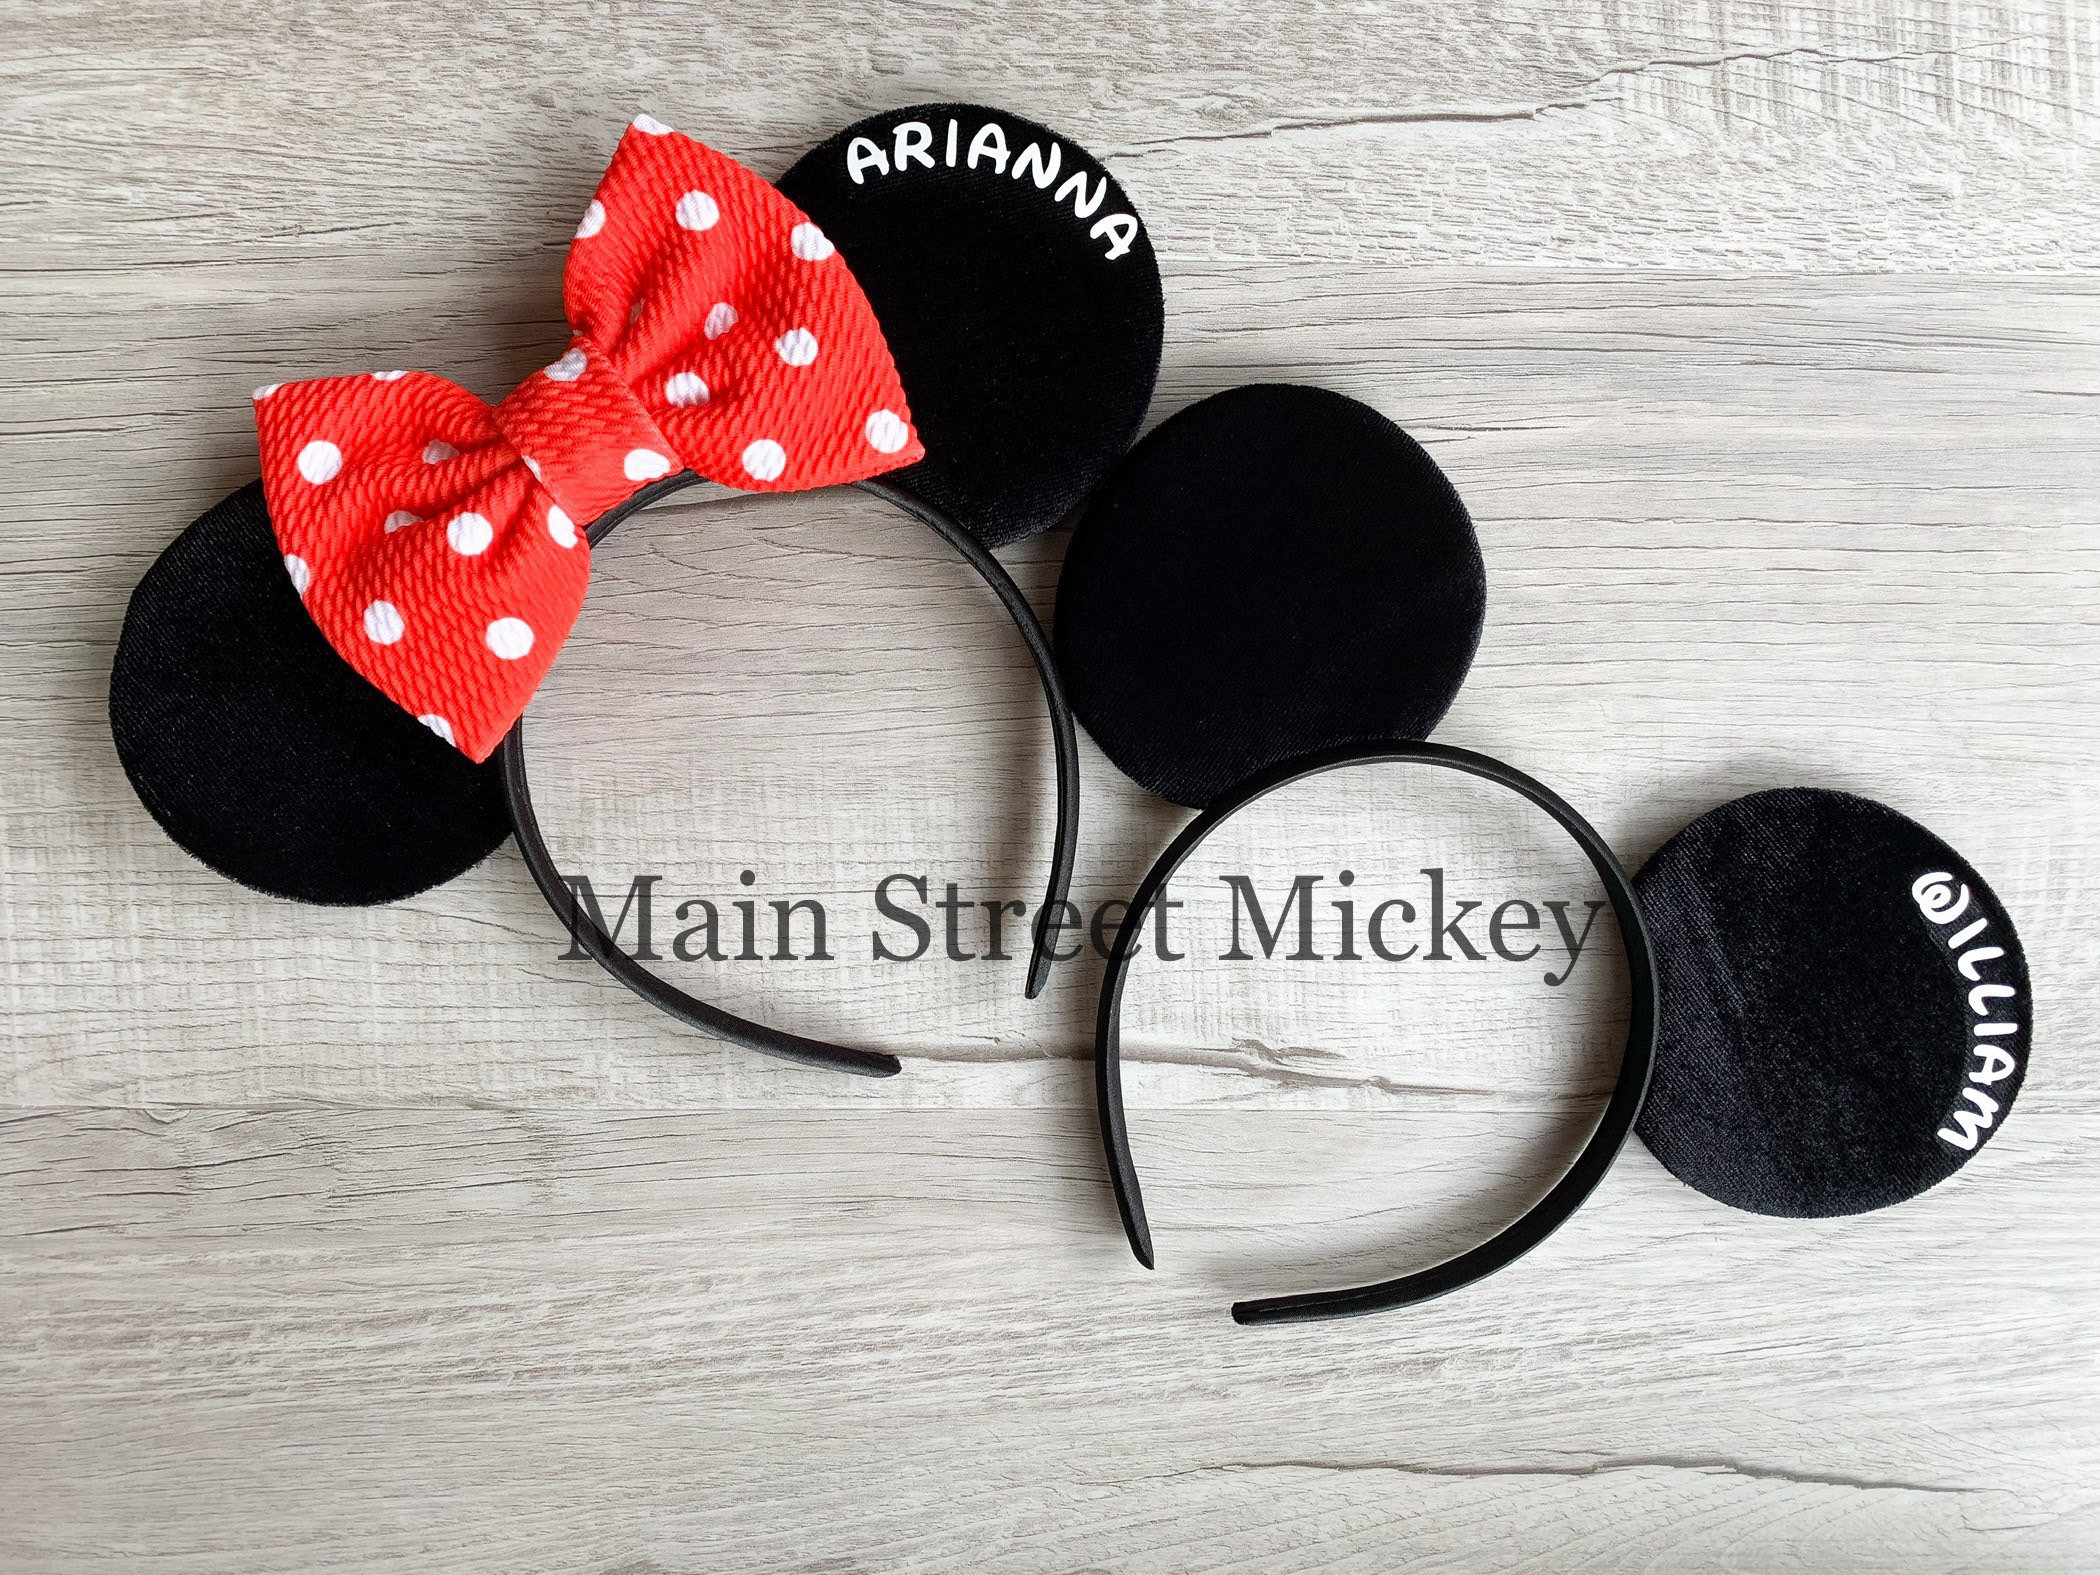 Minnie Mouse orejas nombre personalizado 26 x 24 vinilo pared